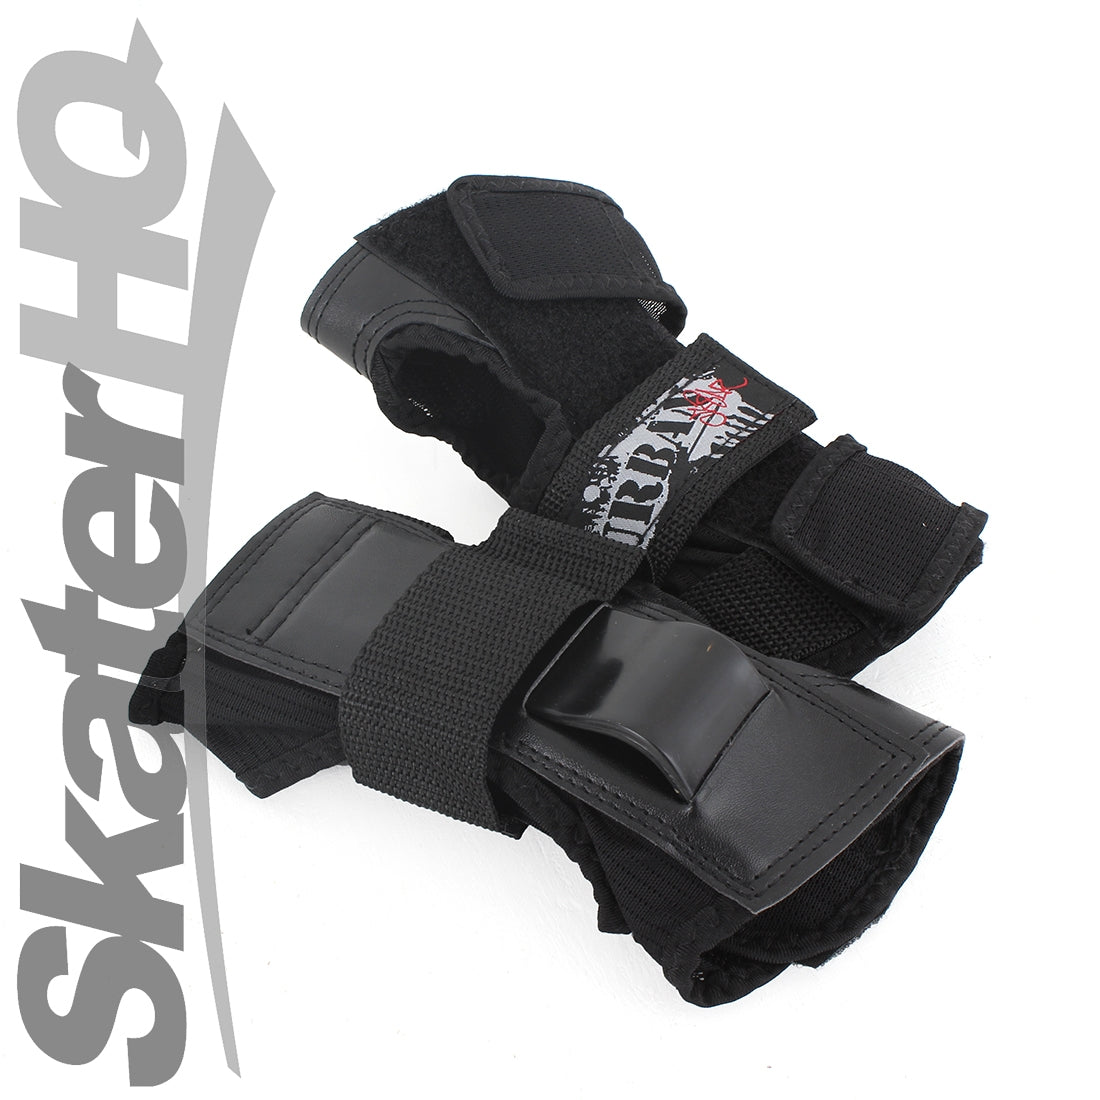 Urban Skater Tri Pack Black - Large Protective Gear